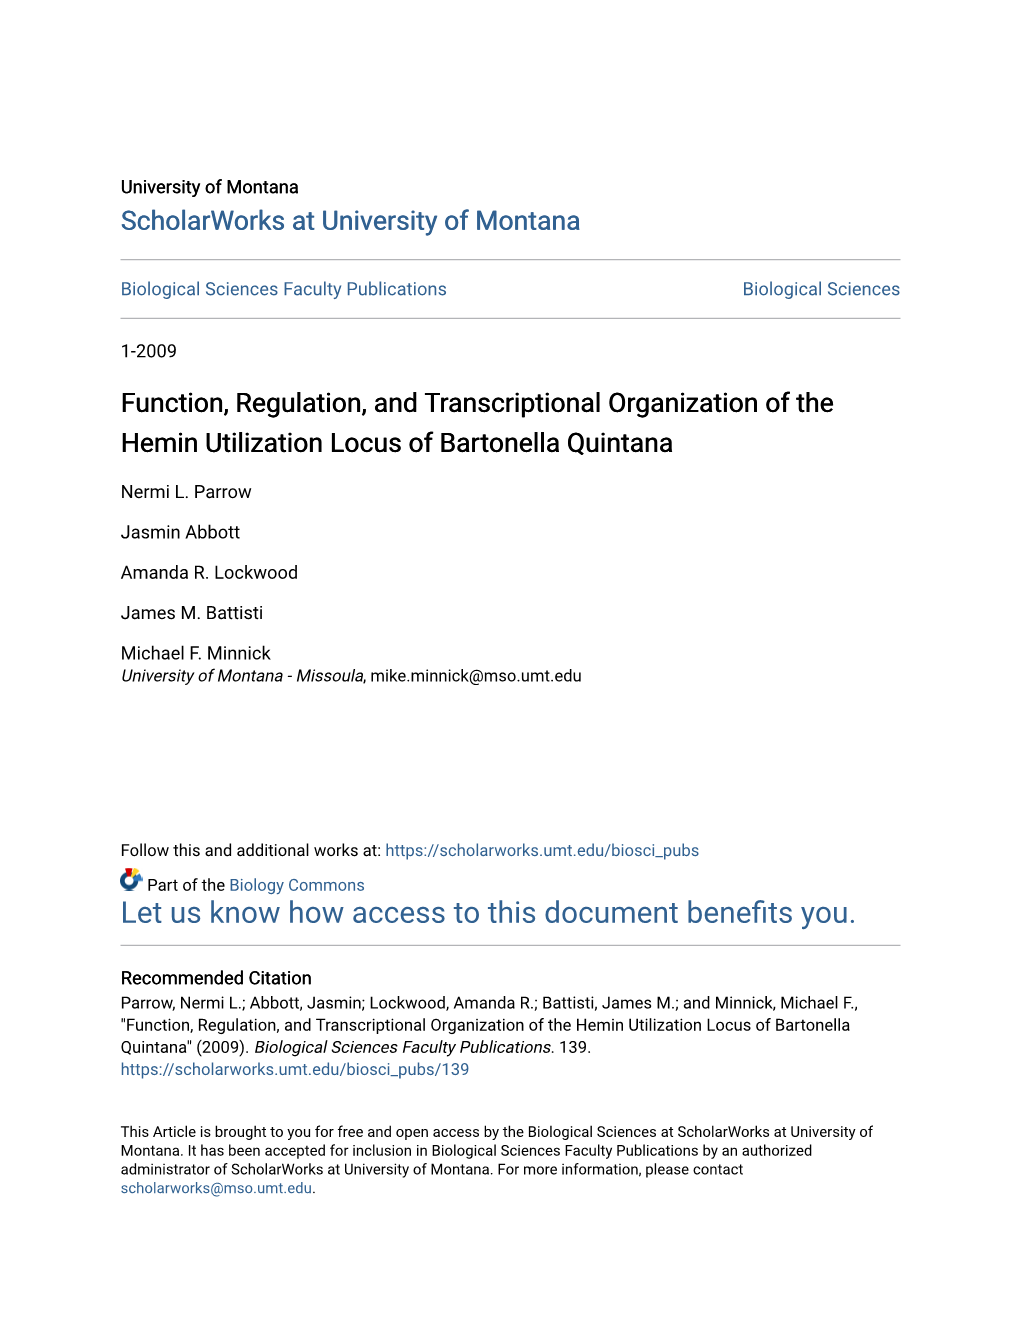 Function, Regulation, and Transcriptional Organization of the Hemin Utilization Locus of Bartonella Quintana